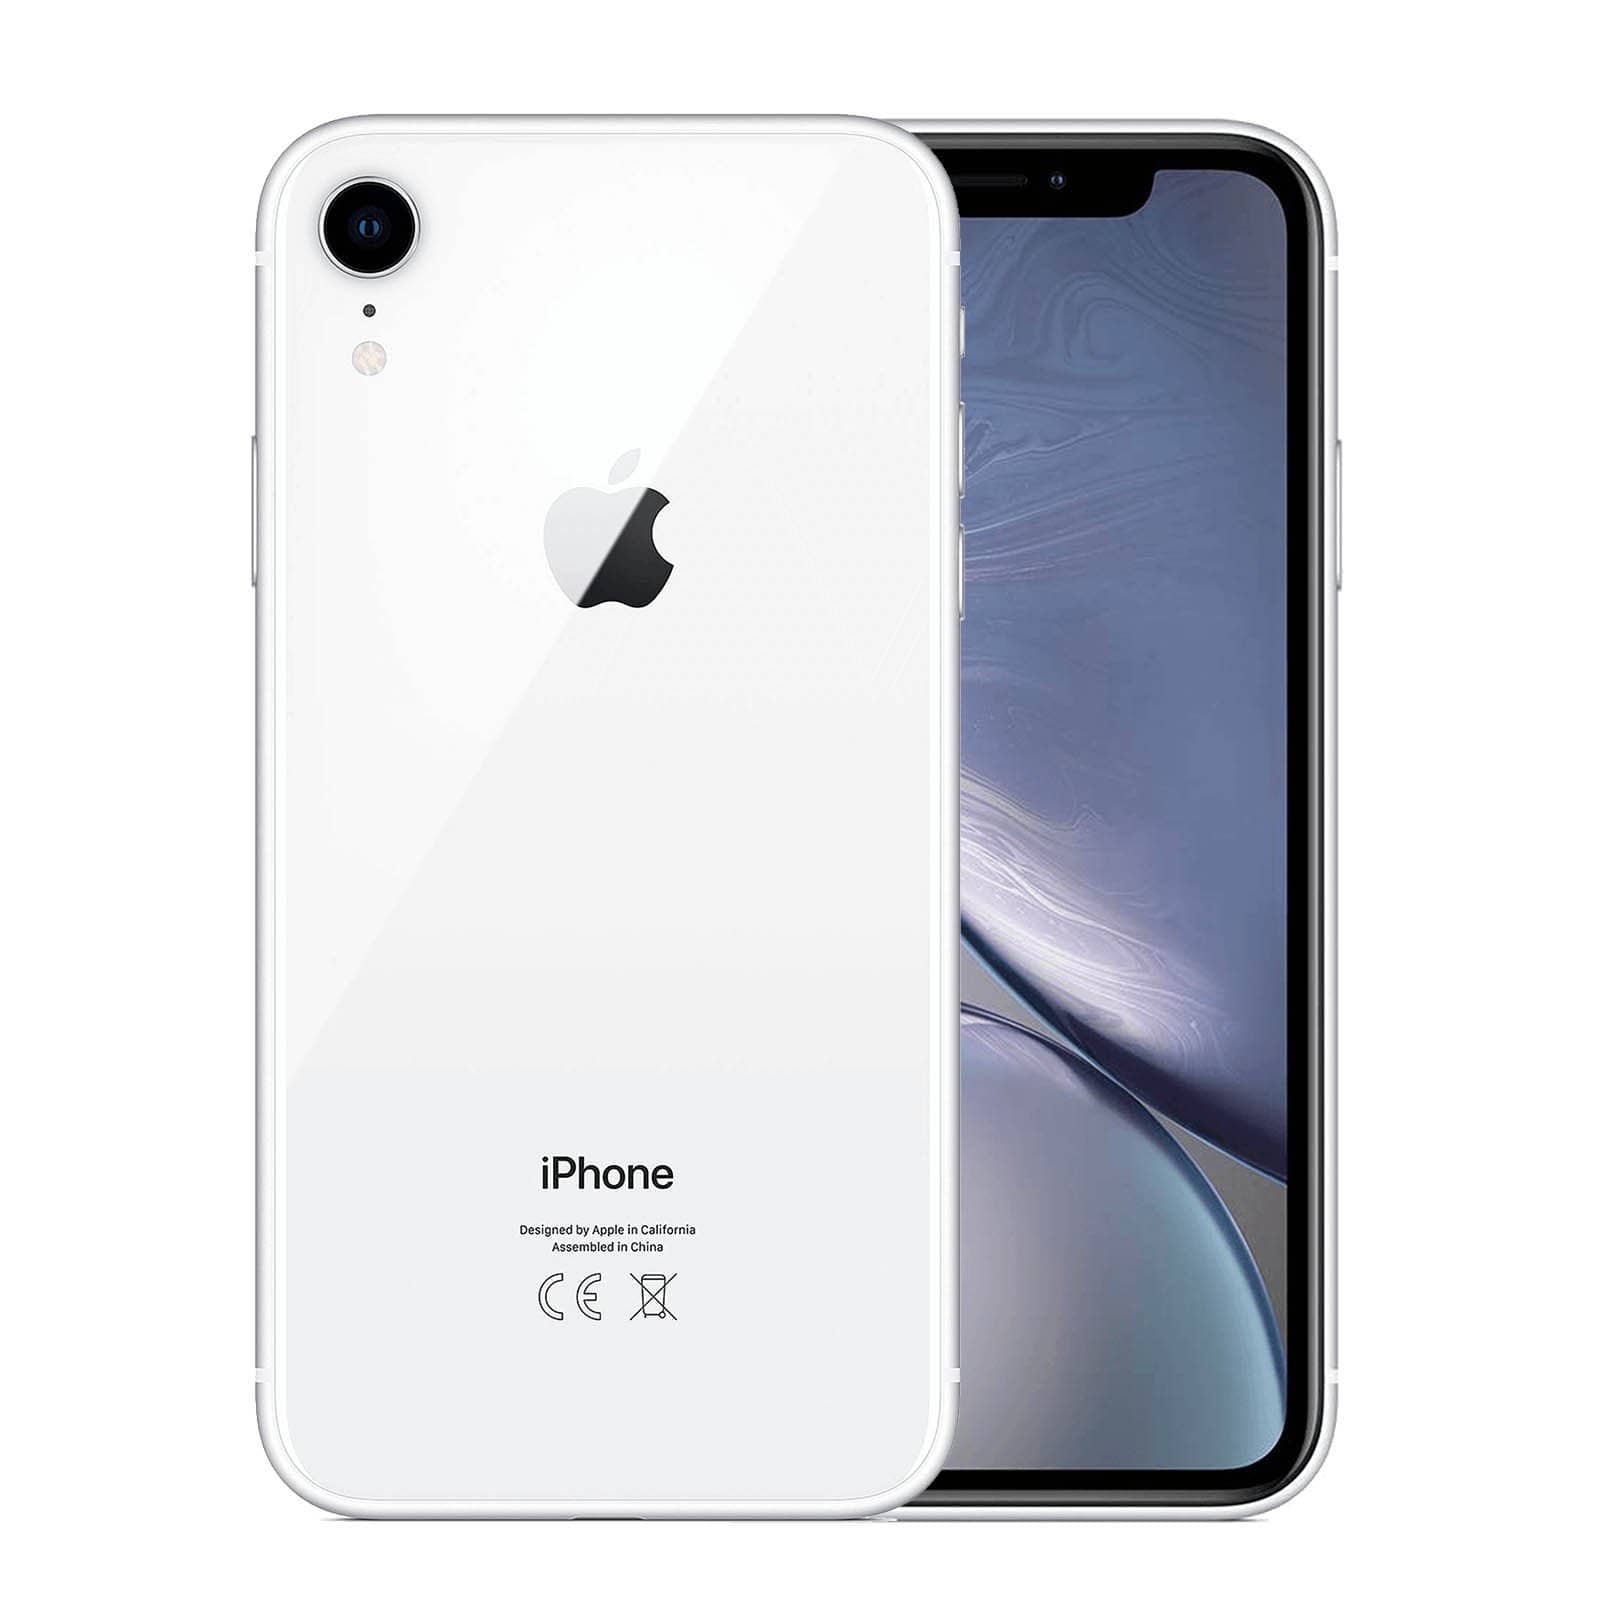 Apple iPhone XR 256GB White Very Good - Unlocked 256GB White Very Good